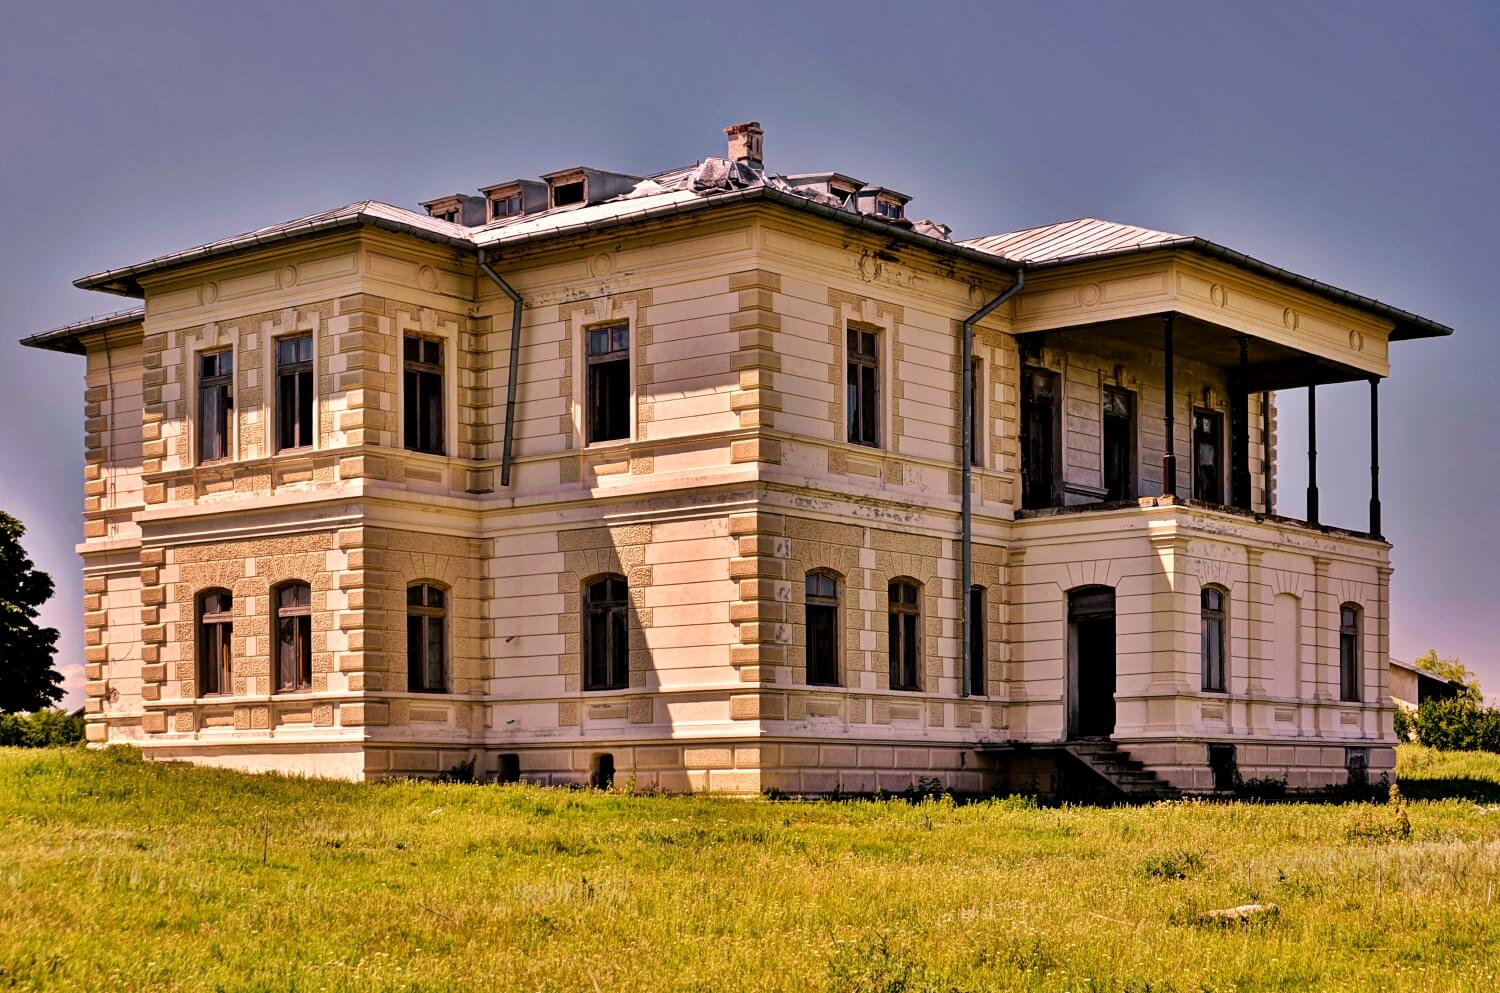 The Marghiloman Manor